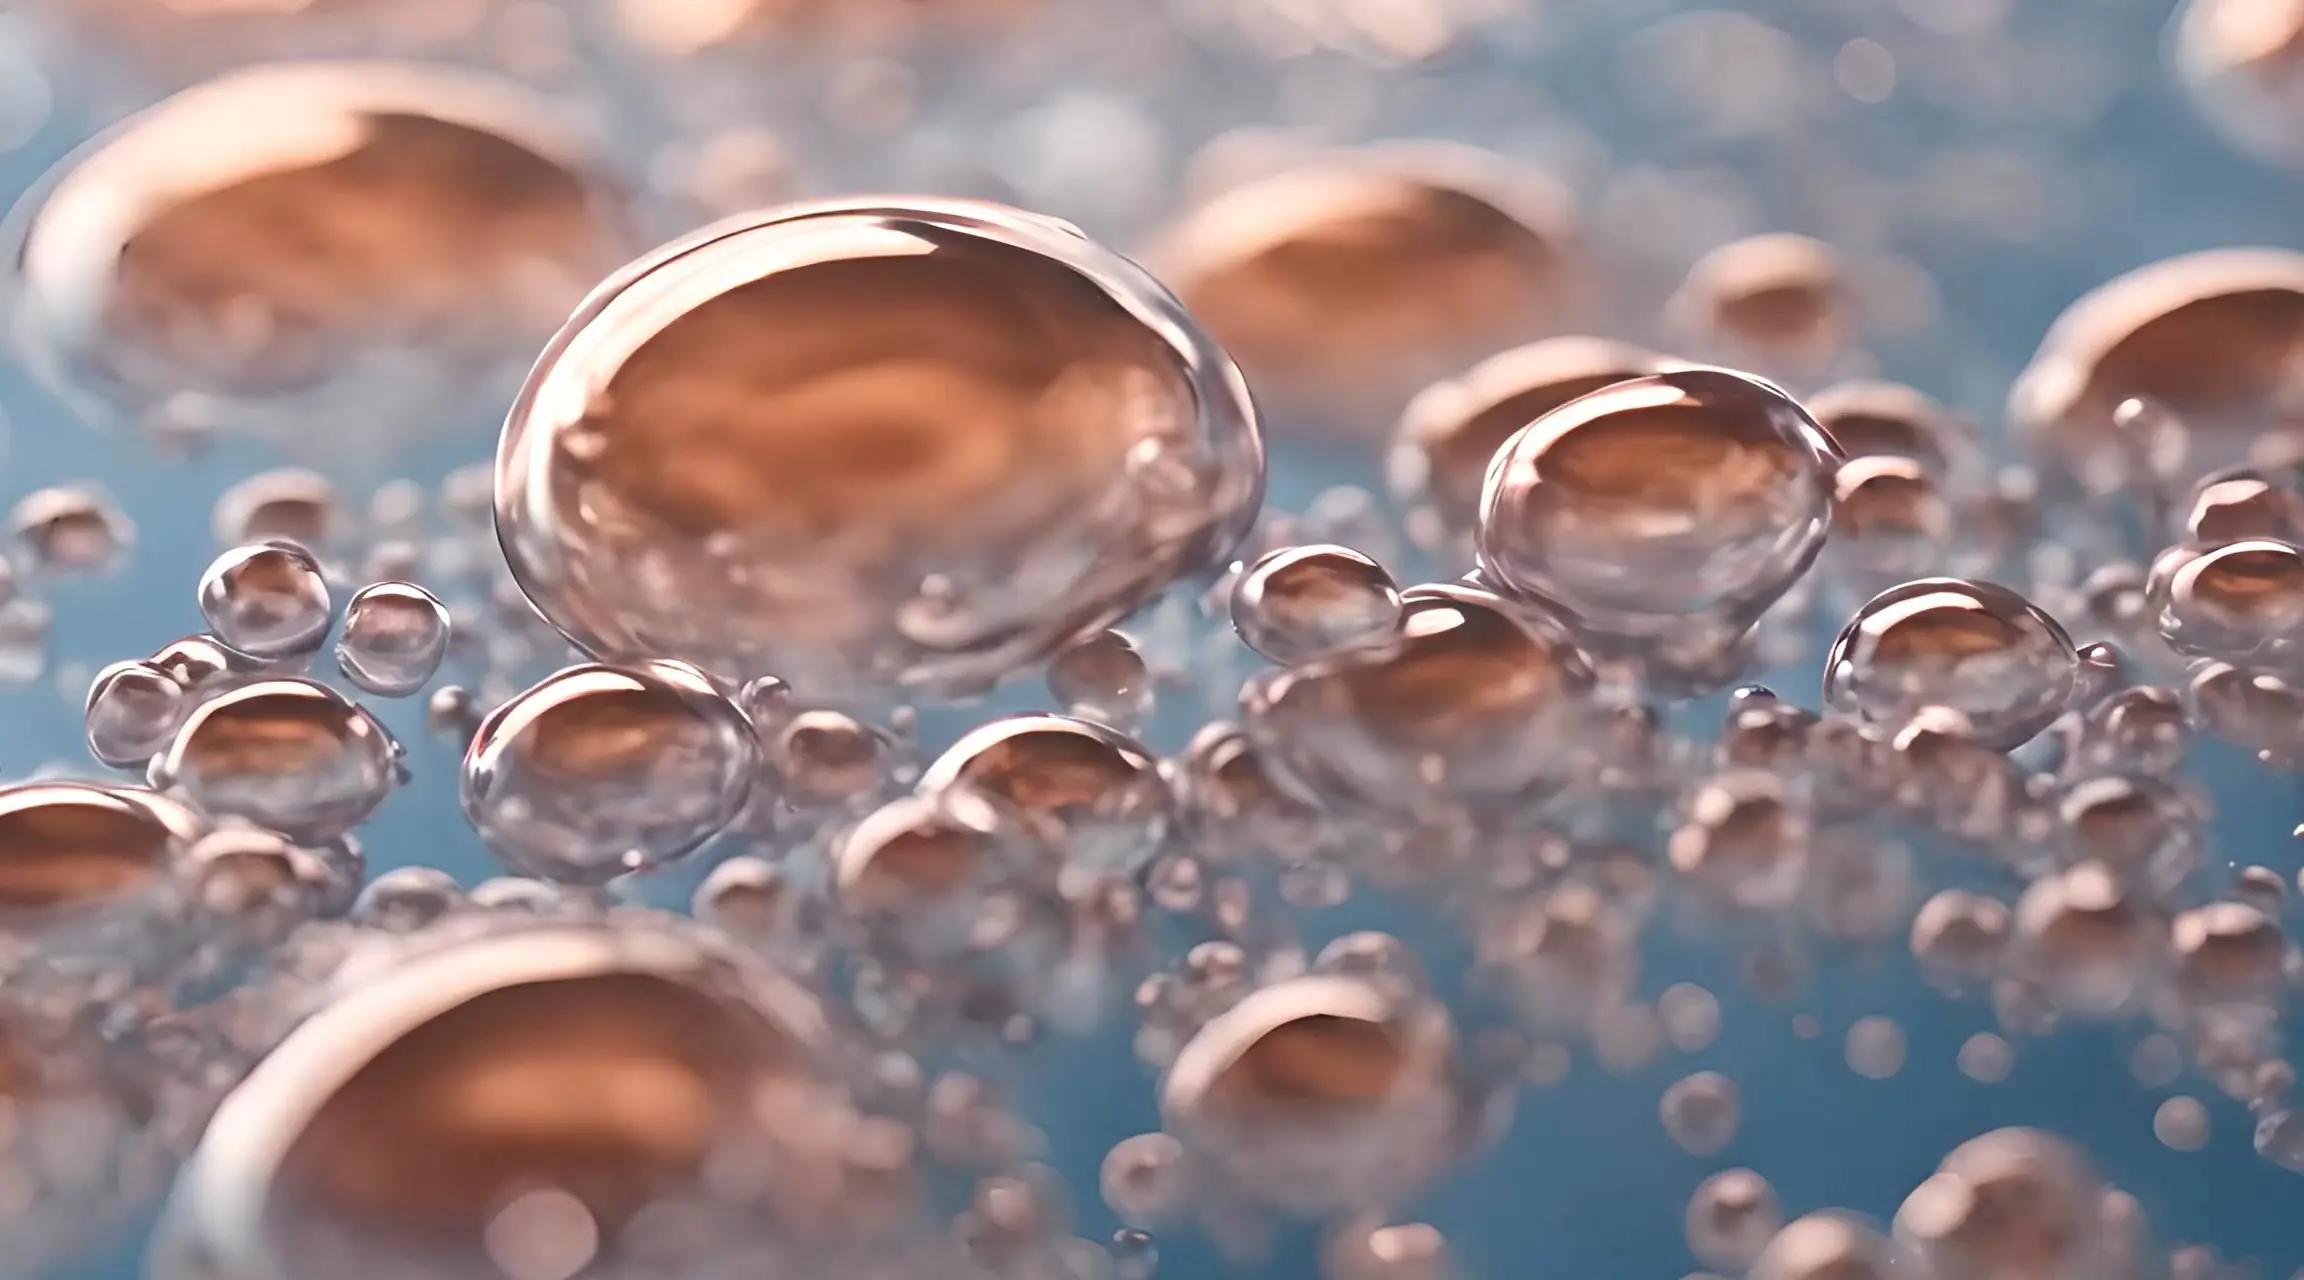 Glistening Bubble Close-Up Motion Video